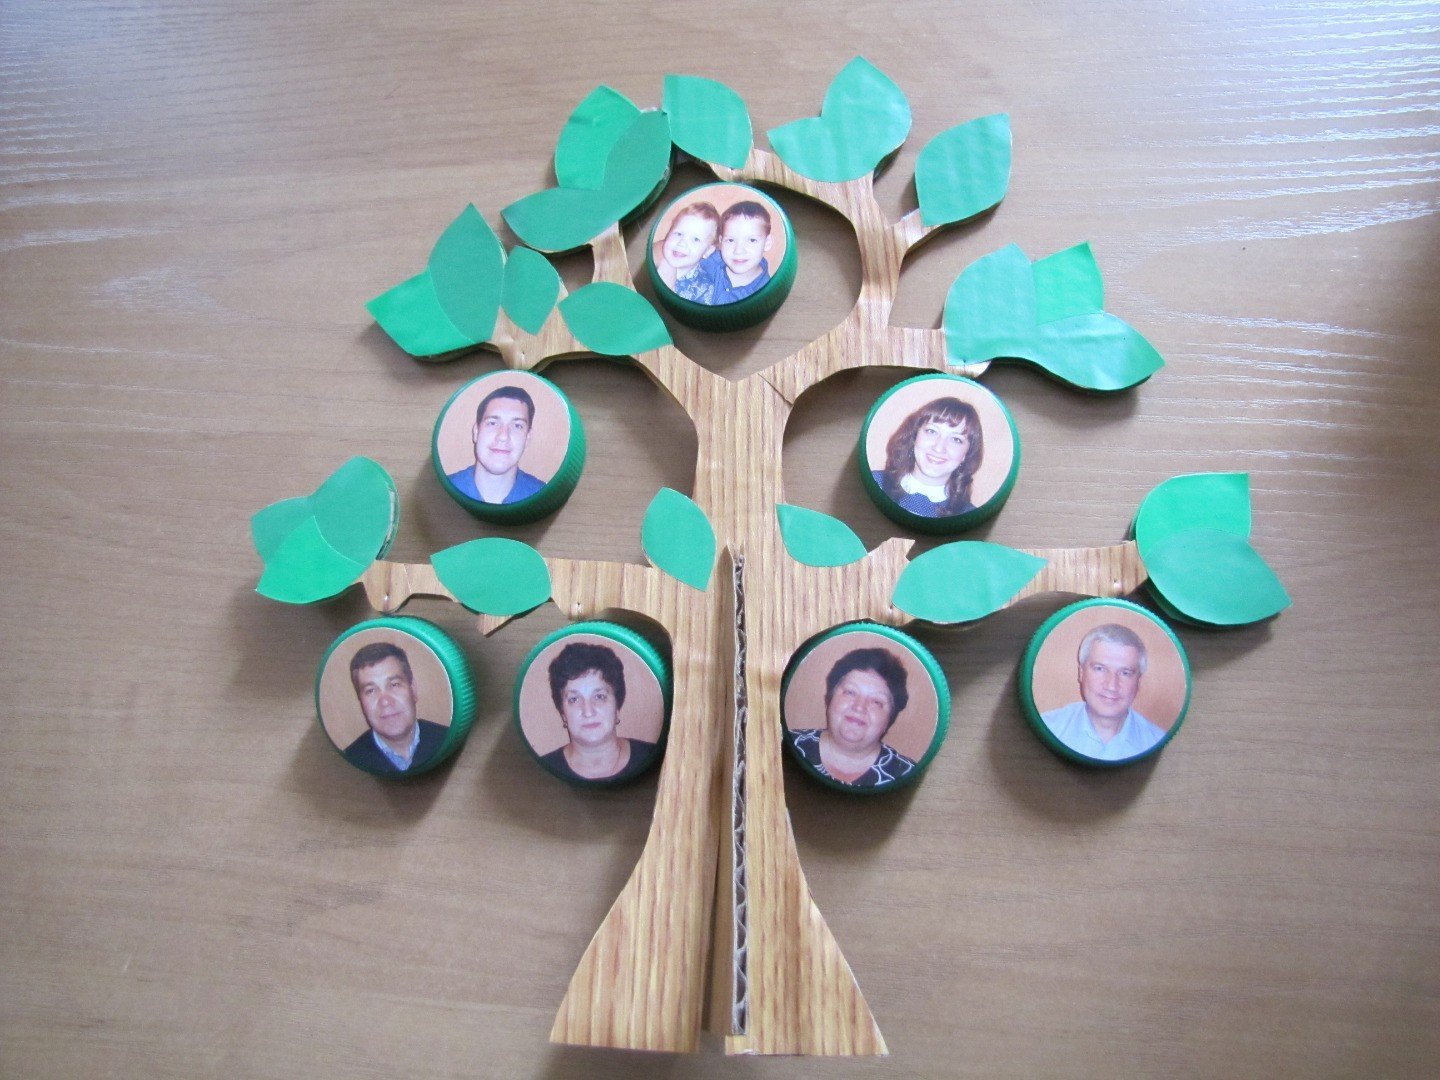 Поделки дерево семьи: идеи по изготовлению своими руками (45 фото)